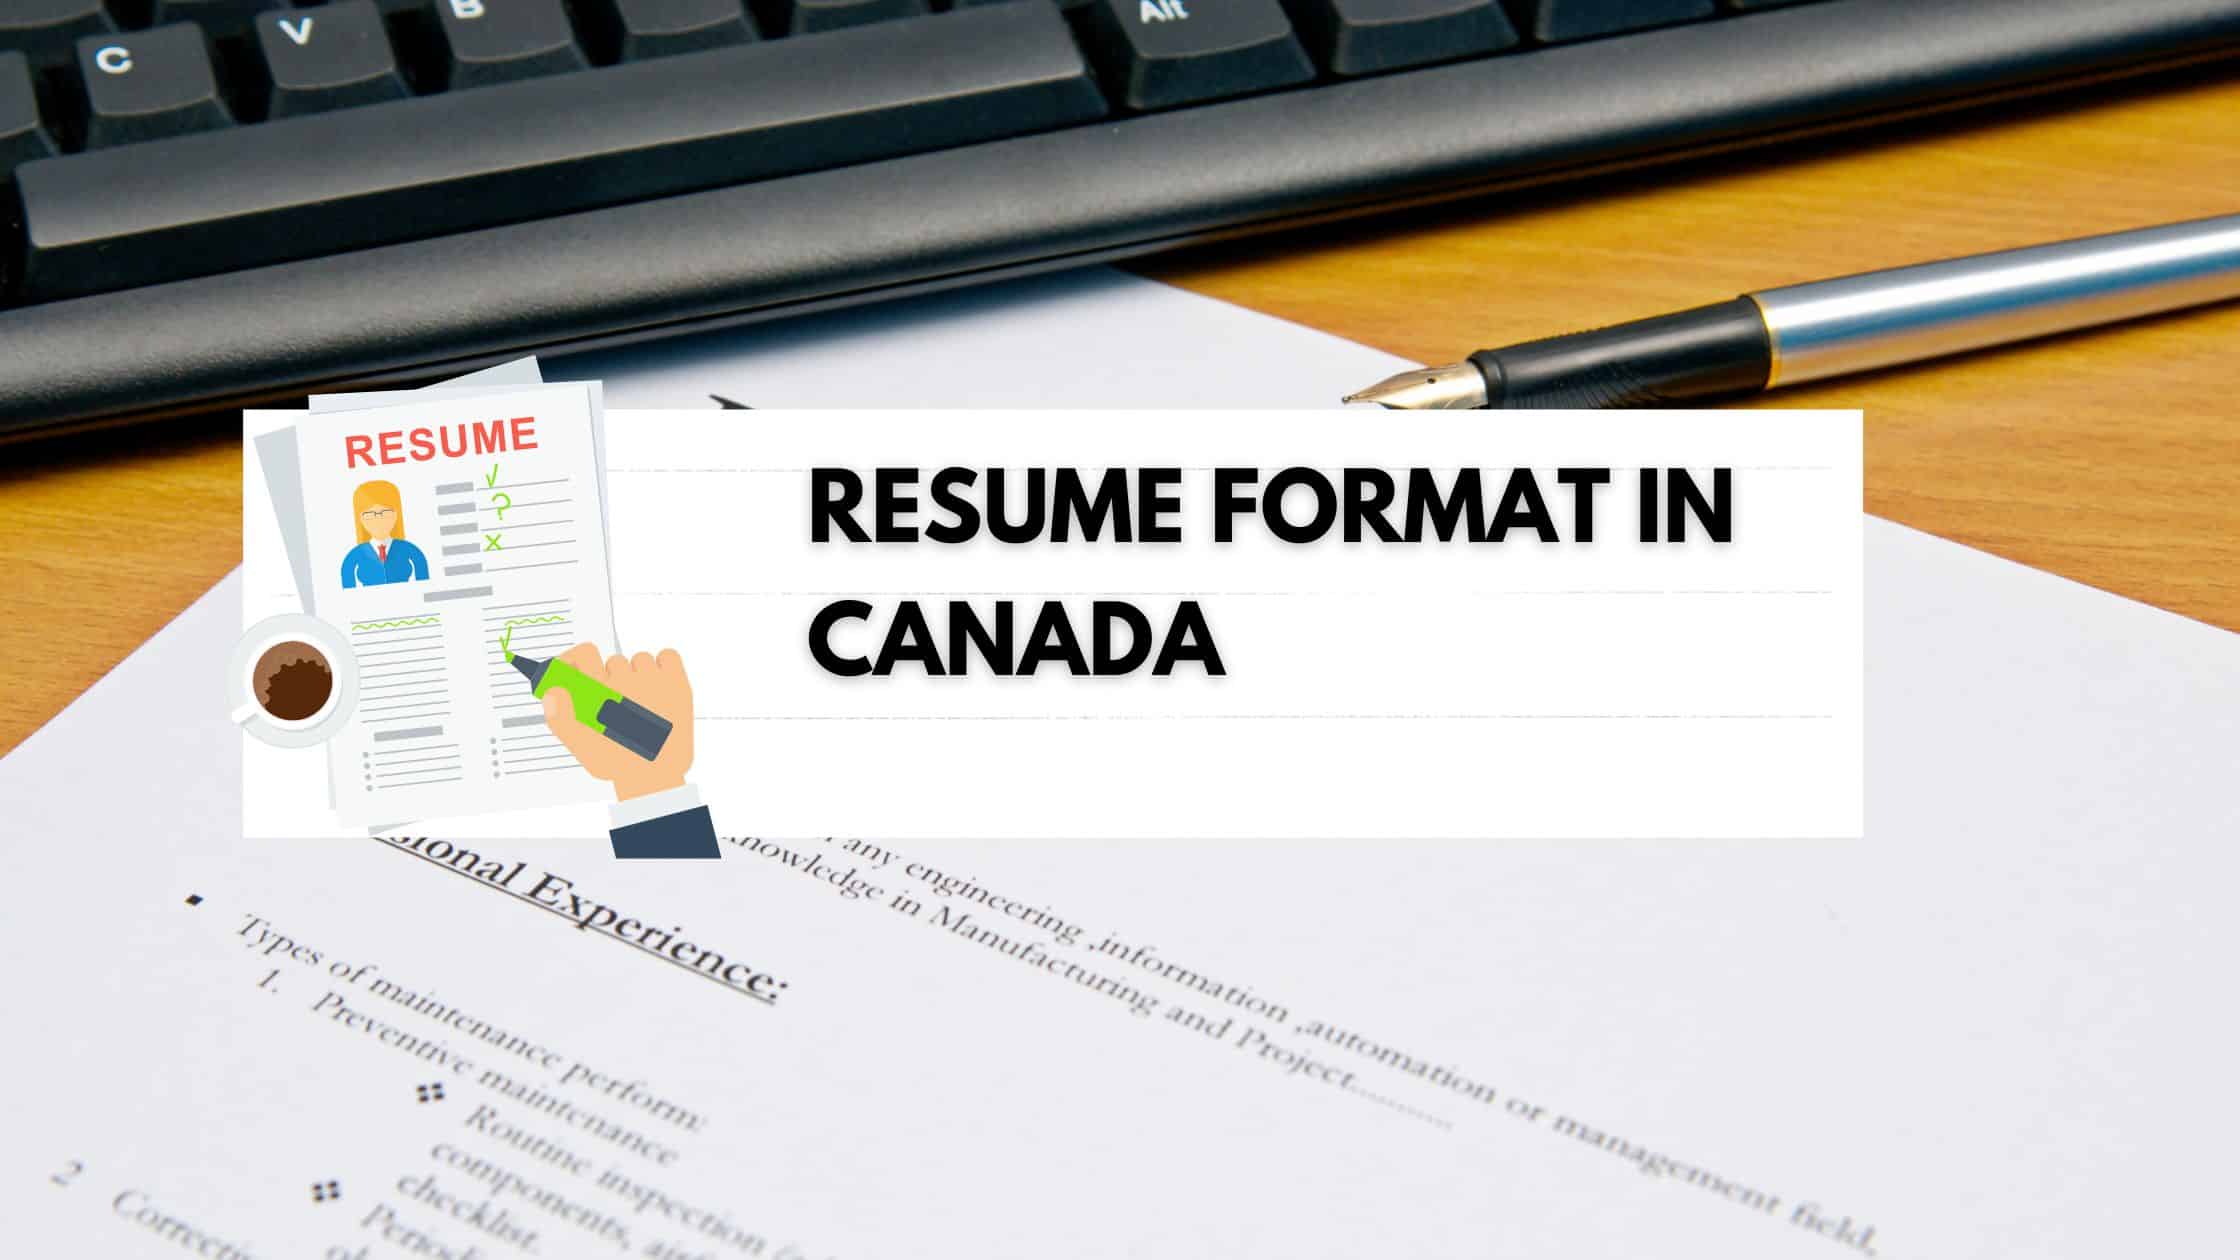 Resume format in Canada